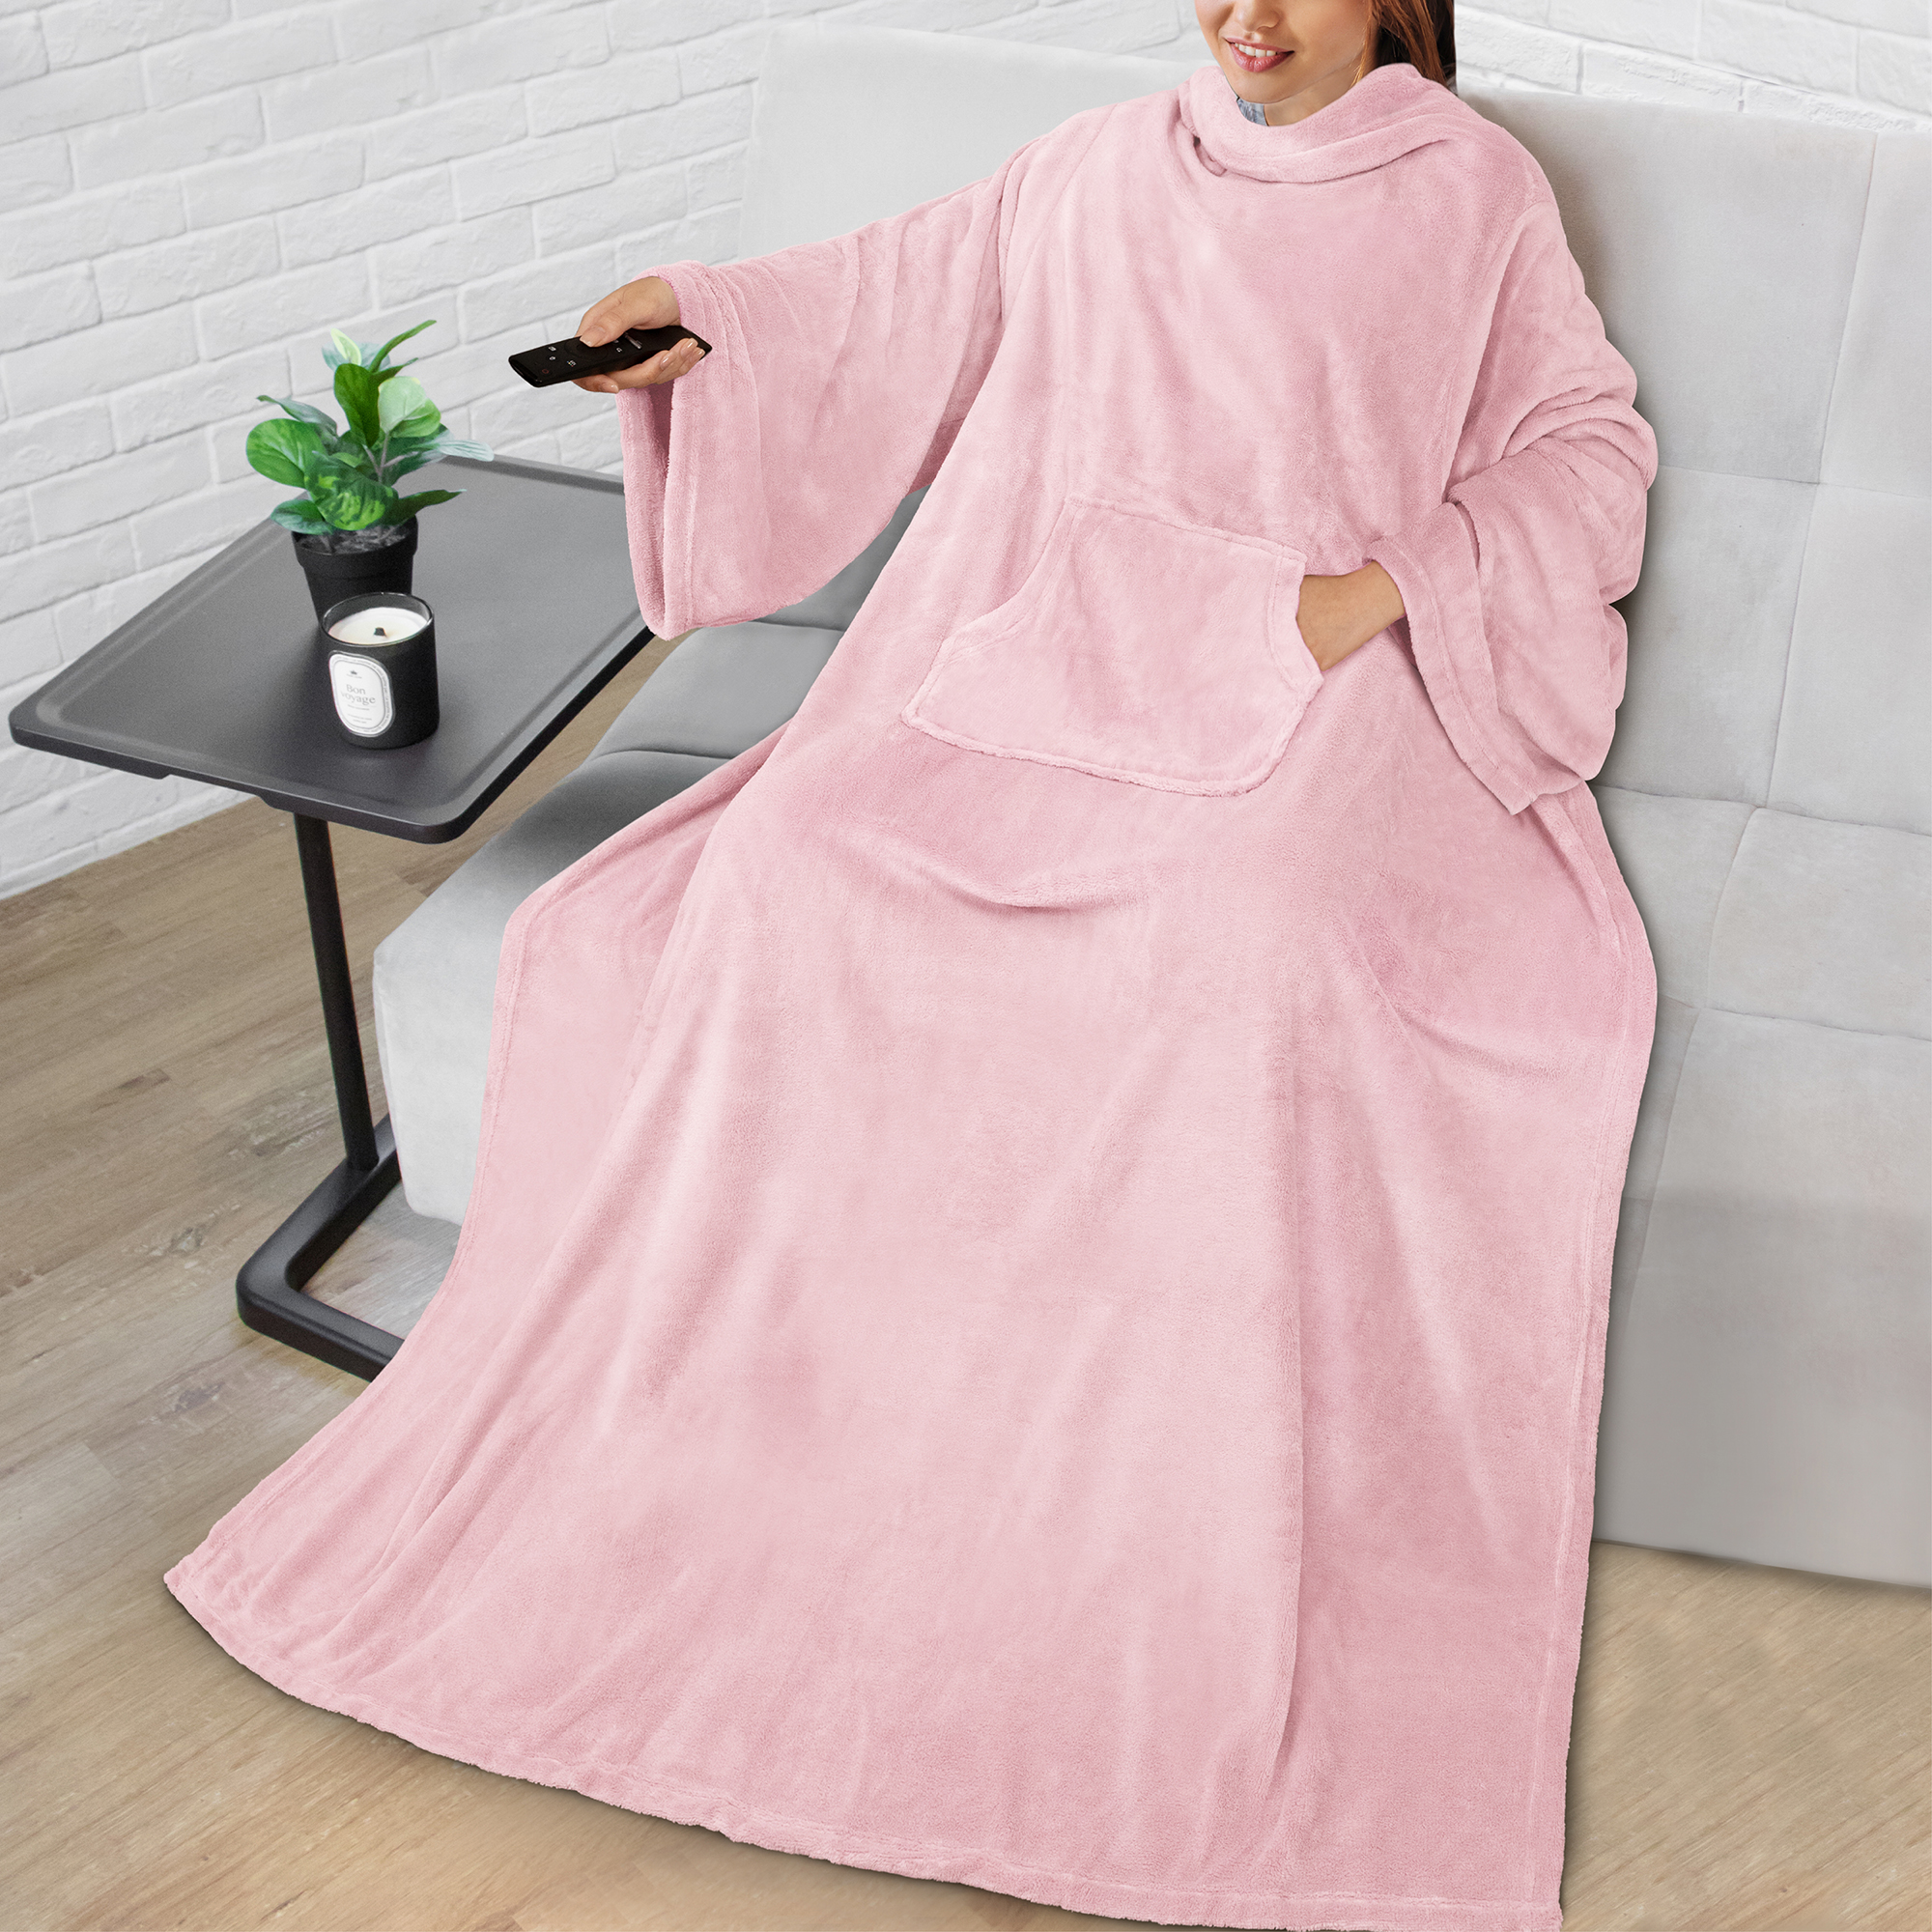 Wearable Blanket with Sleeves Soft Fleece Snuggy Robe Wrap Sofa